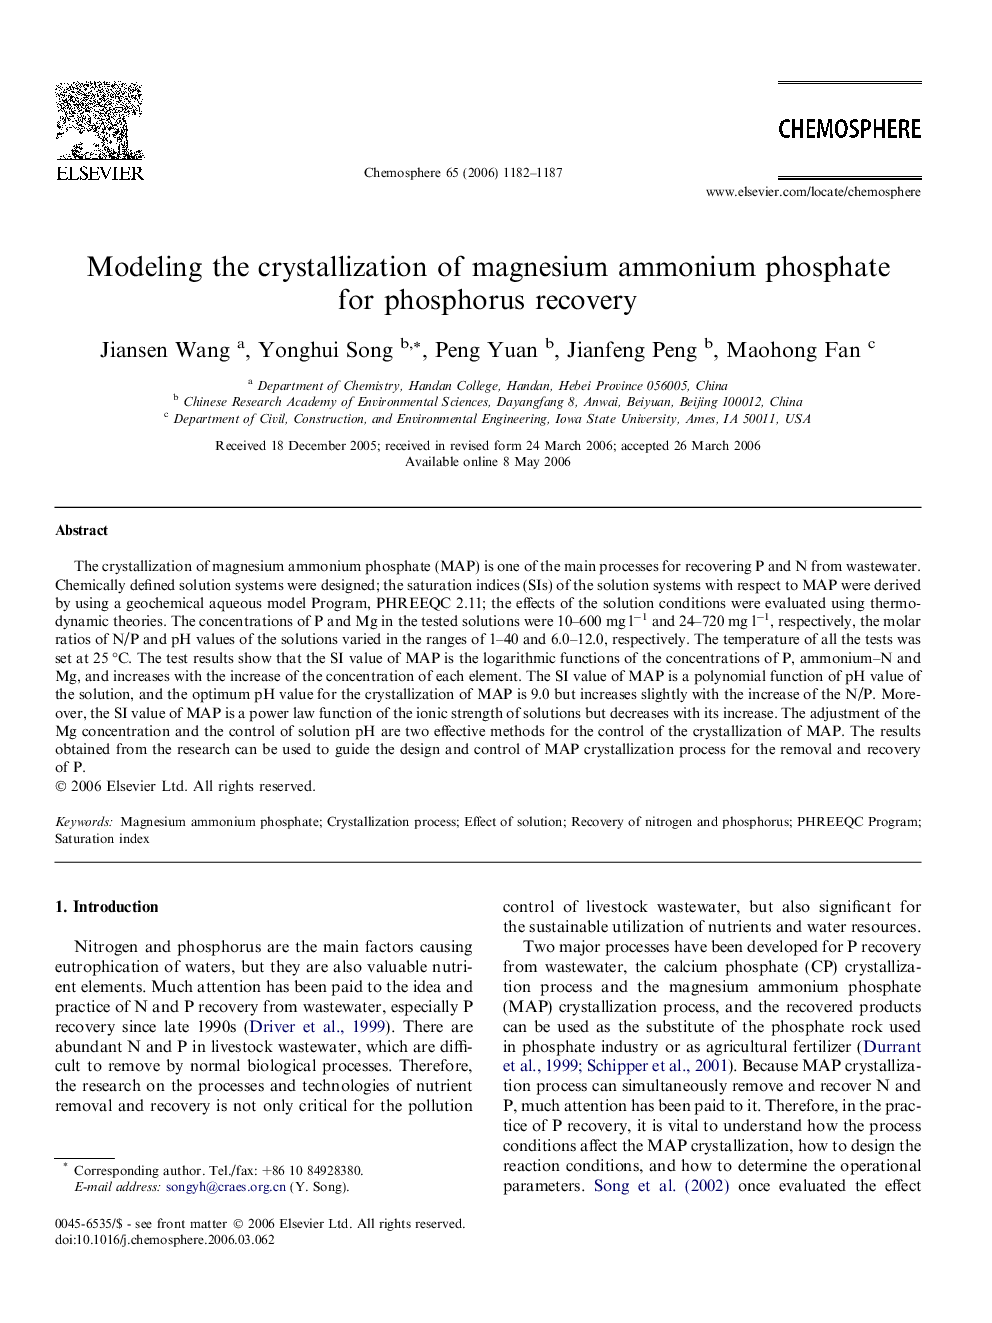 Modeling the crystallization of magnesium ammonium phosphate for phosphorus recovery